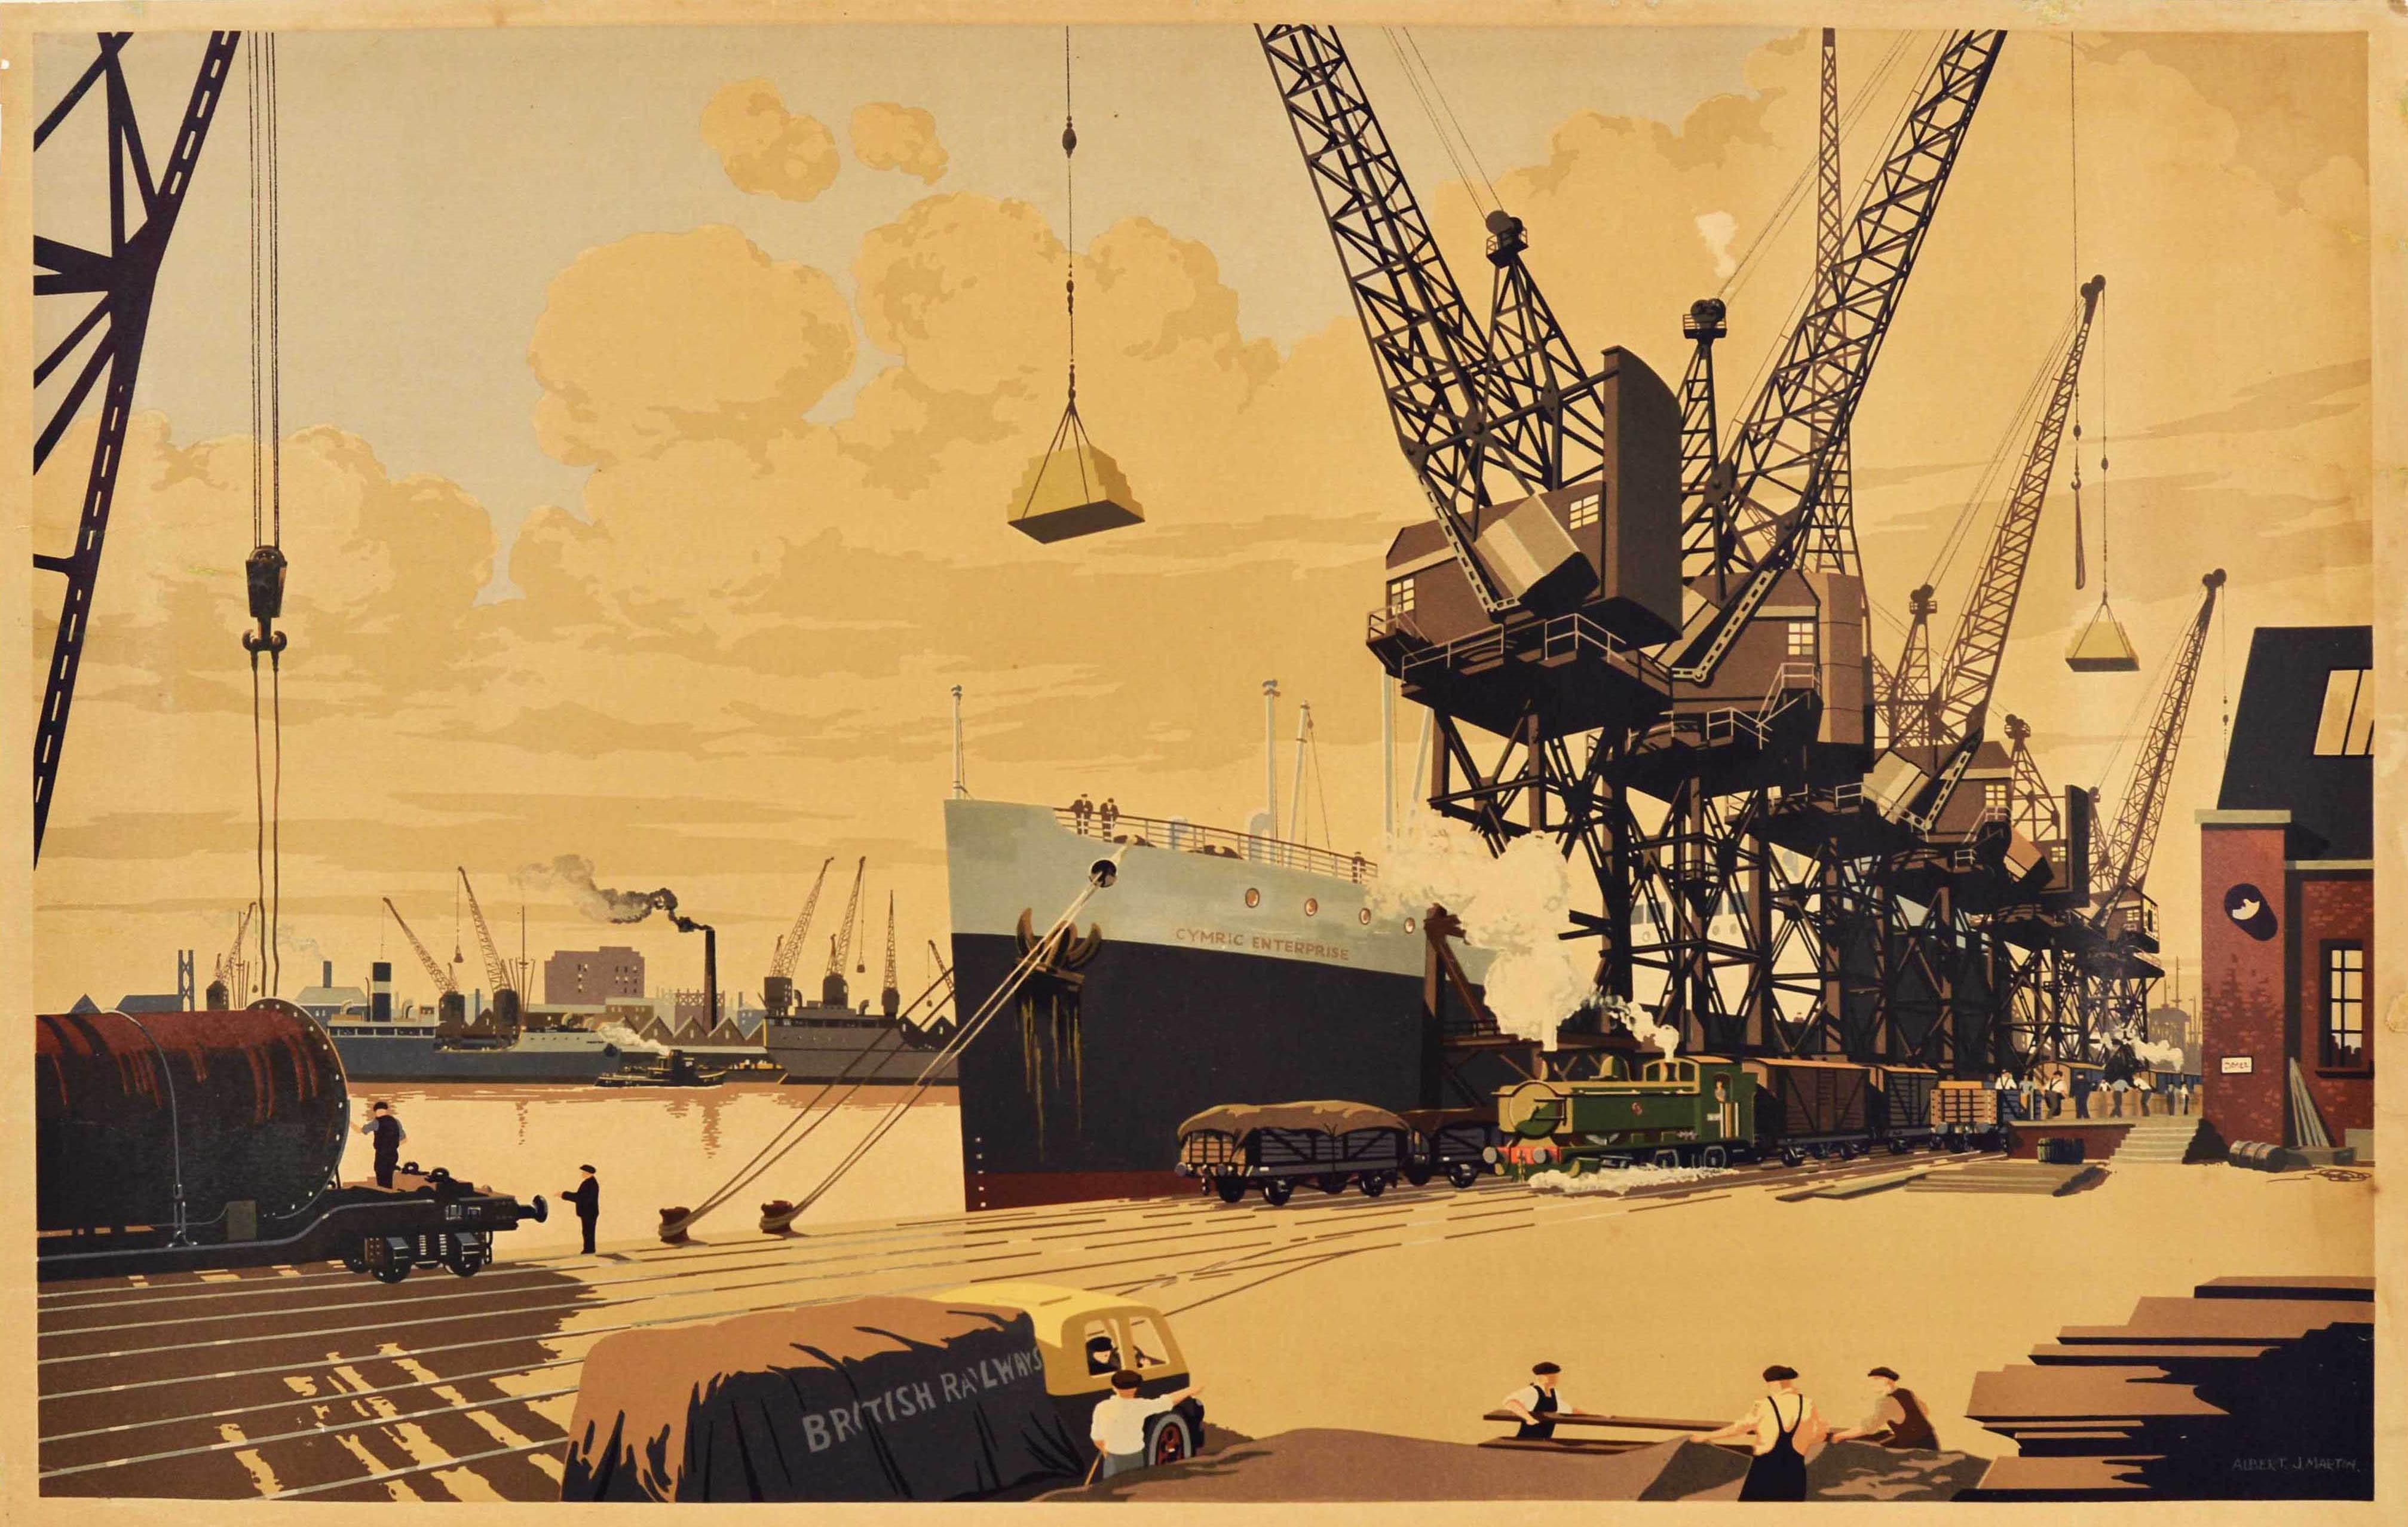 Original Vintage British Railways Poster South Wales Docks Industry Cargo Ship - Print by Albert J Martin